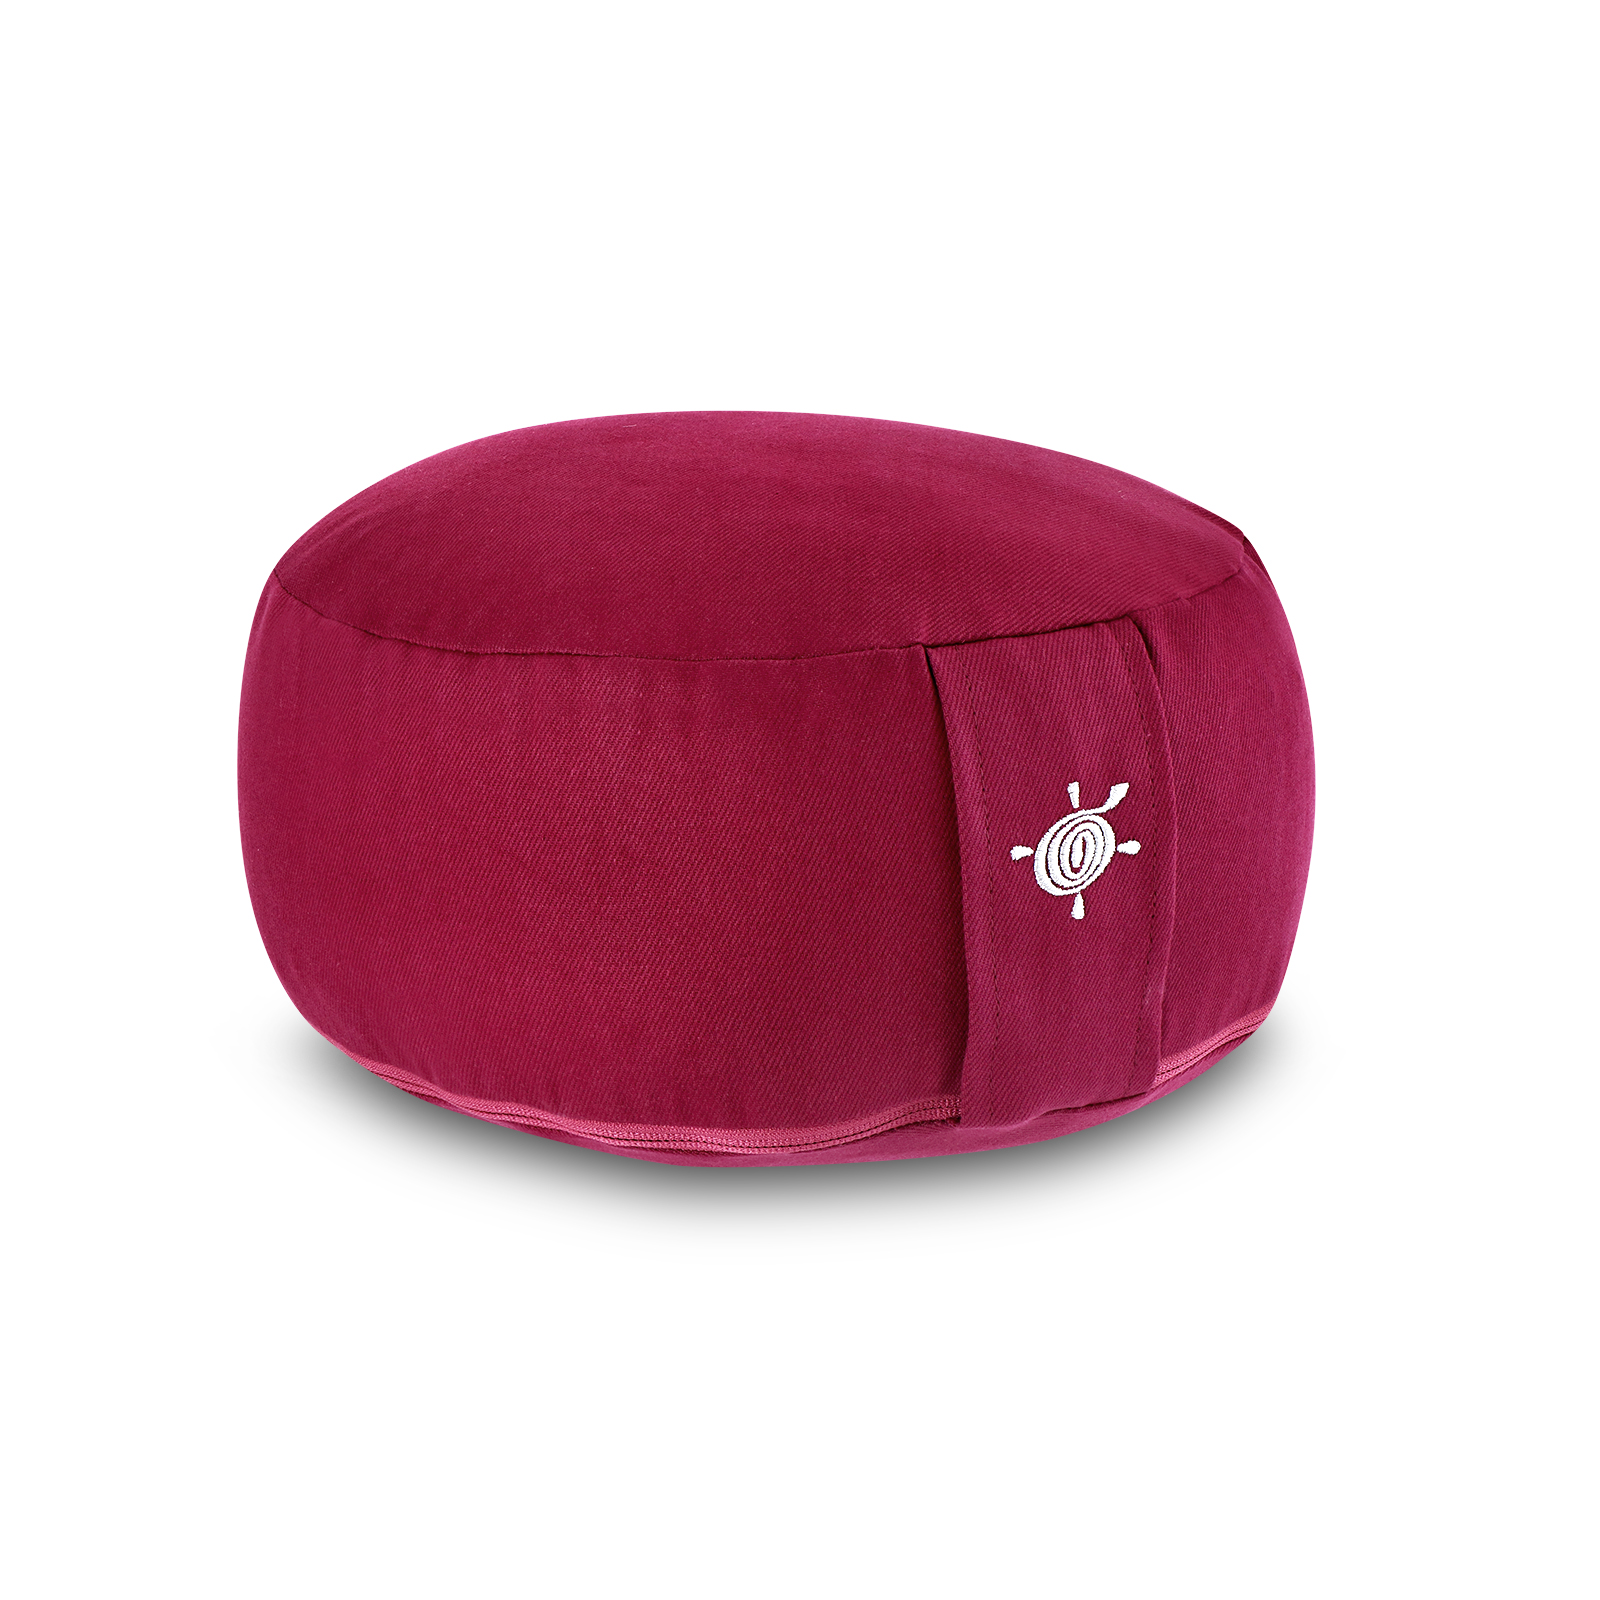 Kurma Yoga round meditation cushion burgundy